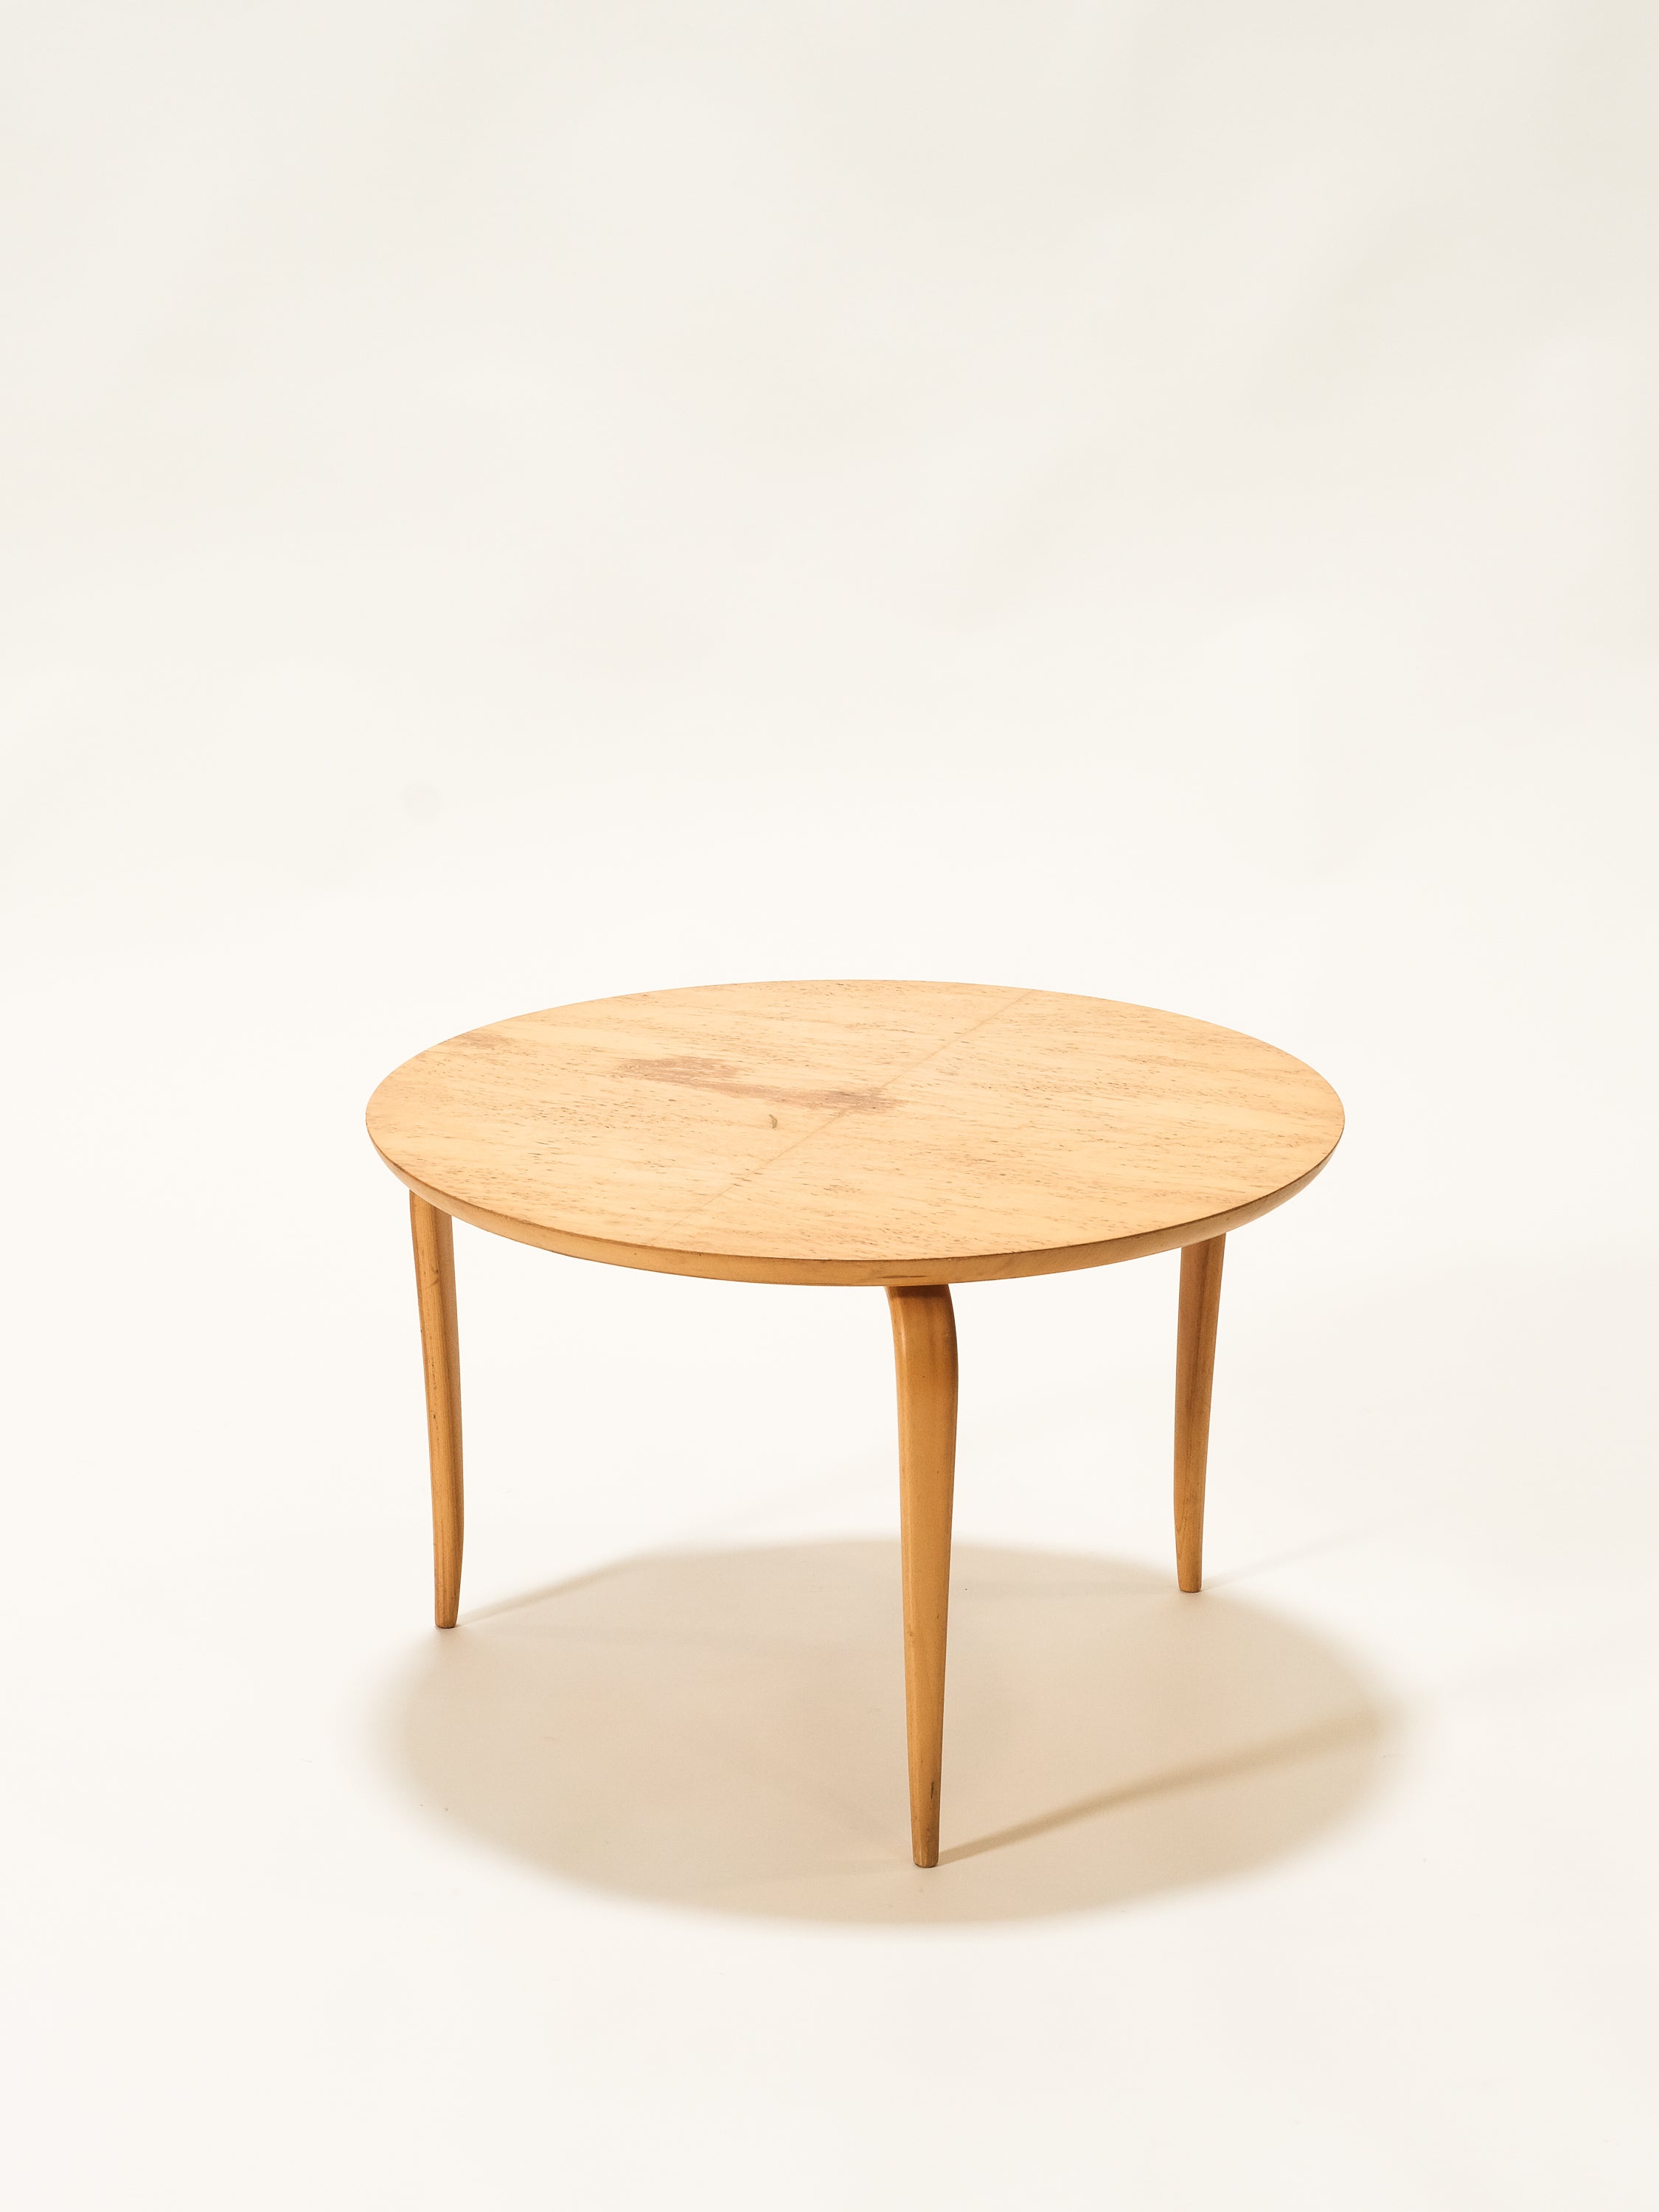 Vintage "Annika" Birch Coffee Table by Bruno Mathsson for Dux, Sweden